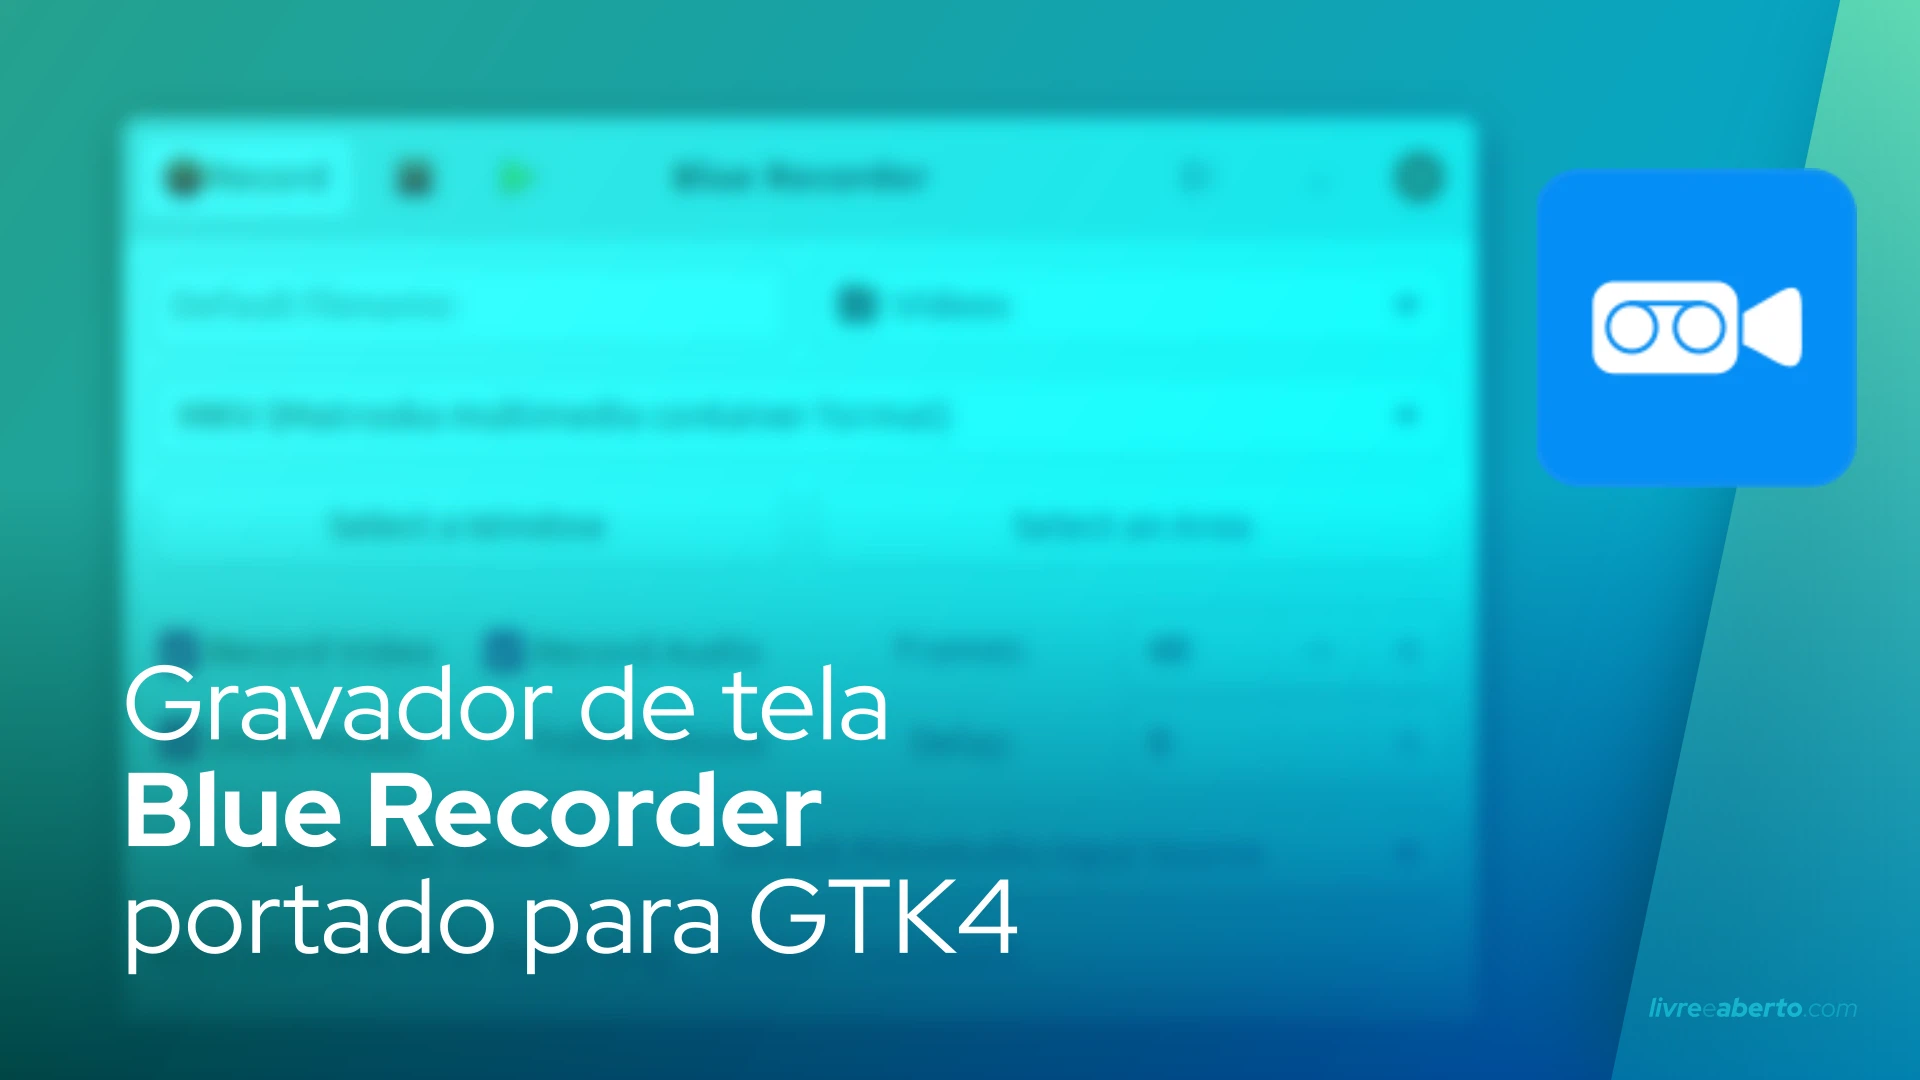 Gravador de tela Blue Recorder portado para GTK4